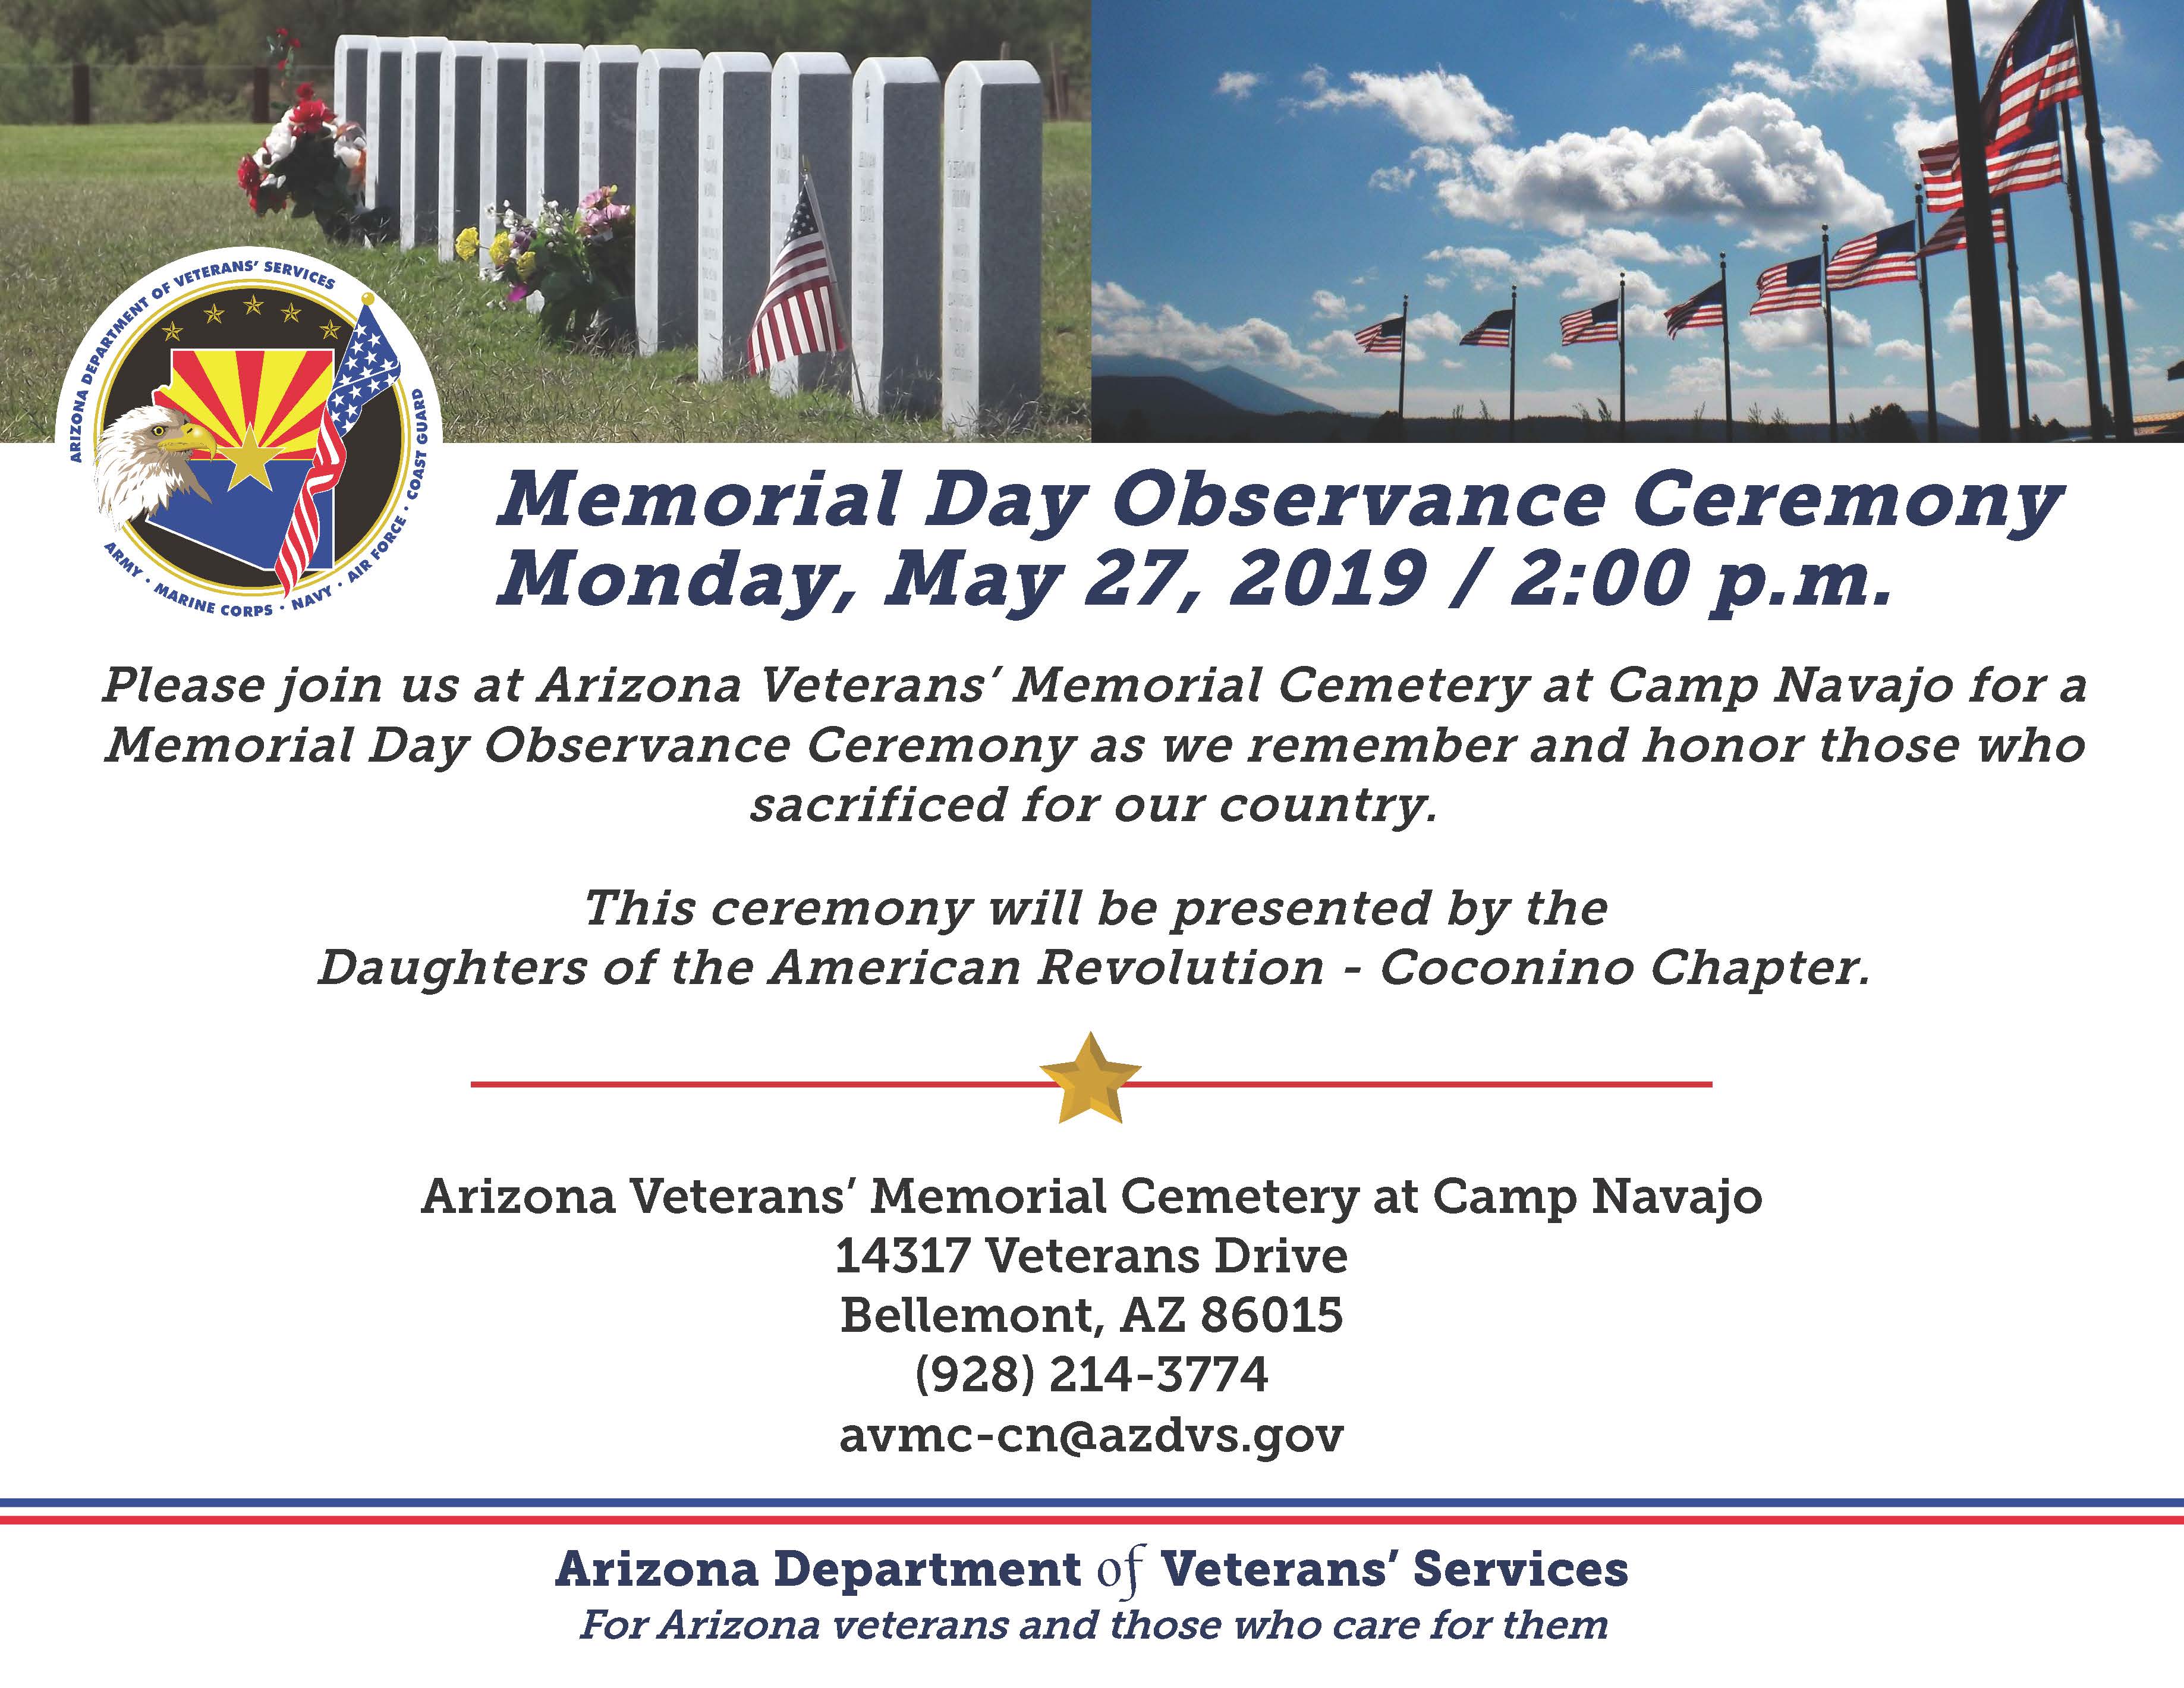 Camp Navajo Memorial Day Ceremony